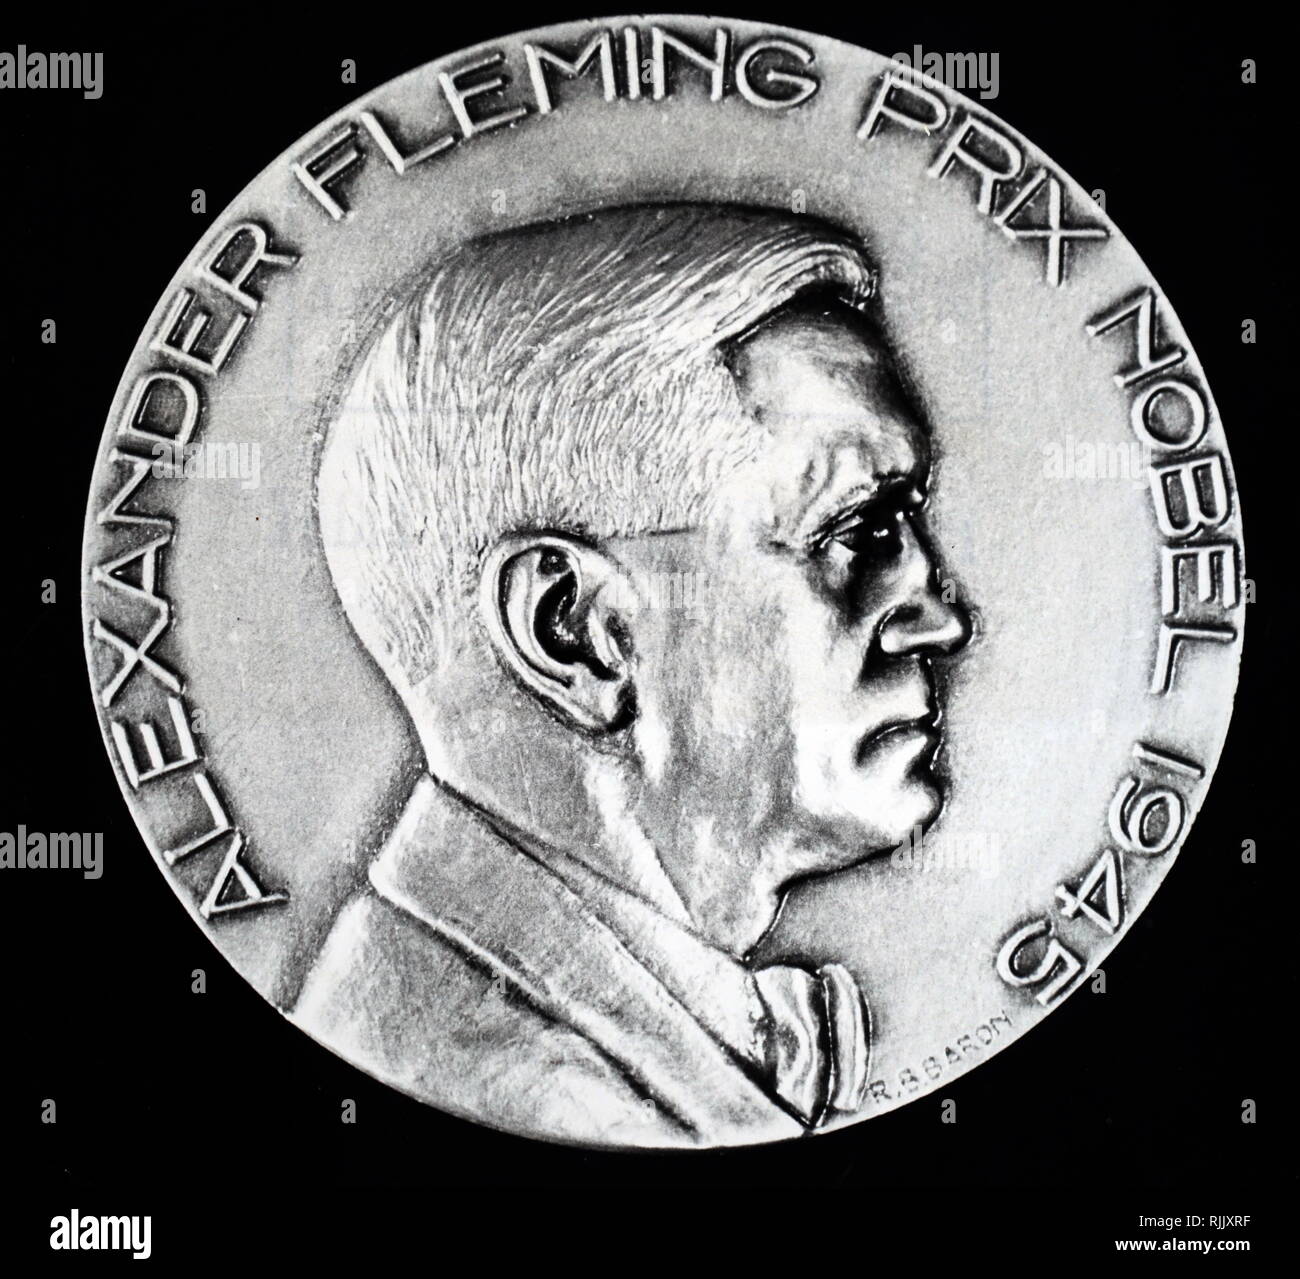 a-medal-commemorating-alexander-flemings-nobel-prize-win-in-1945-alexander-flemi.jpg